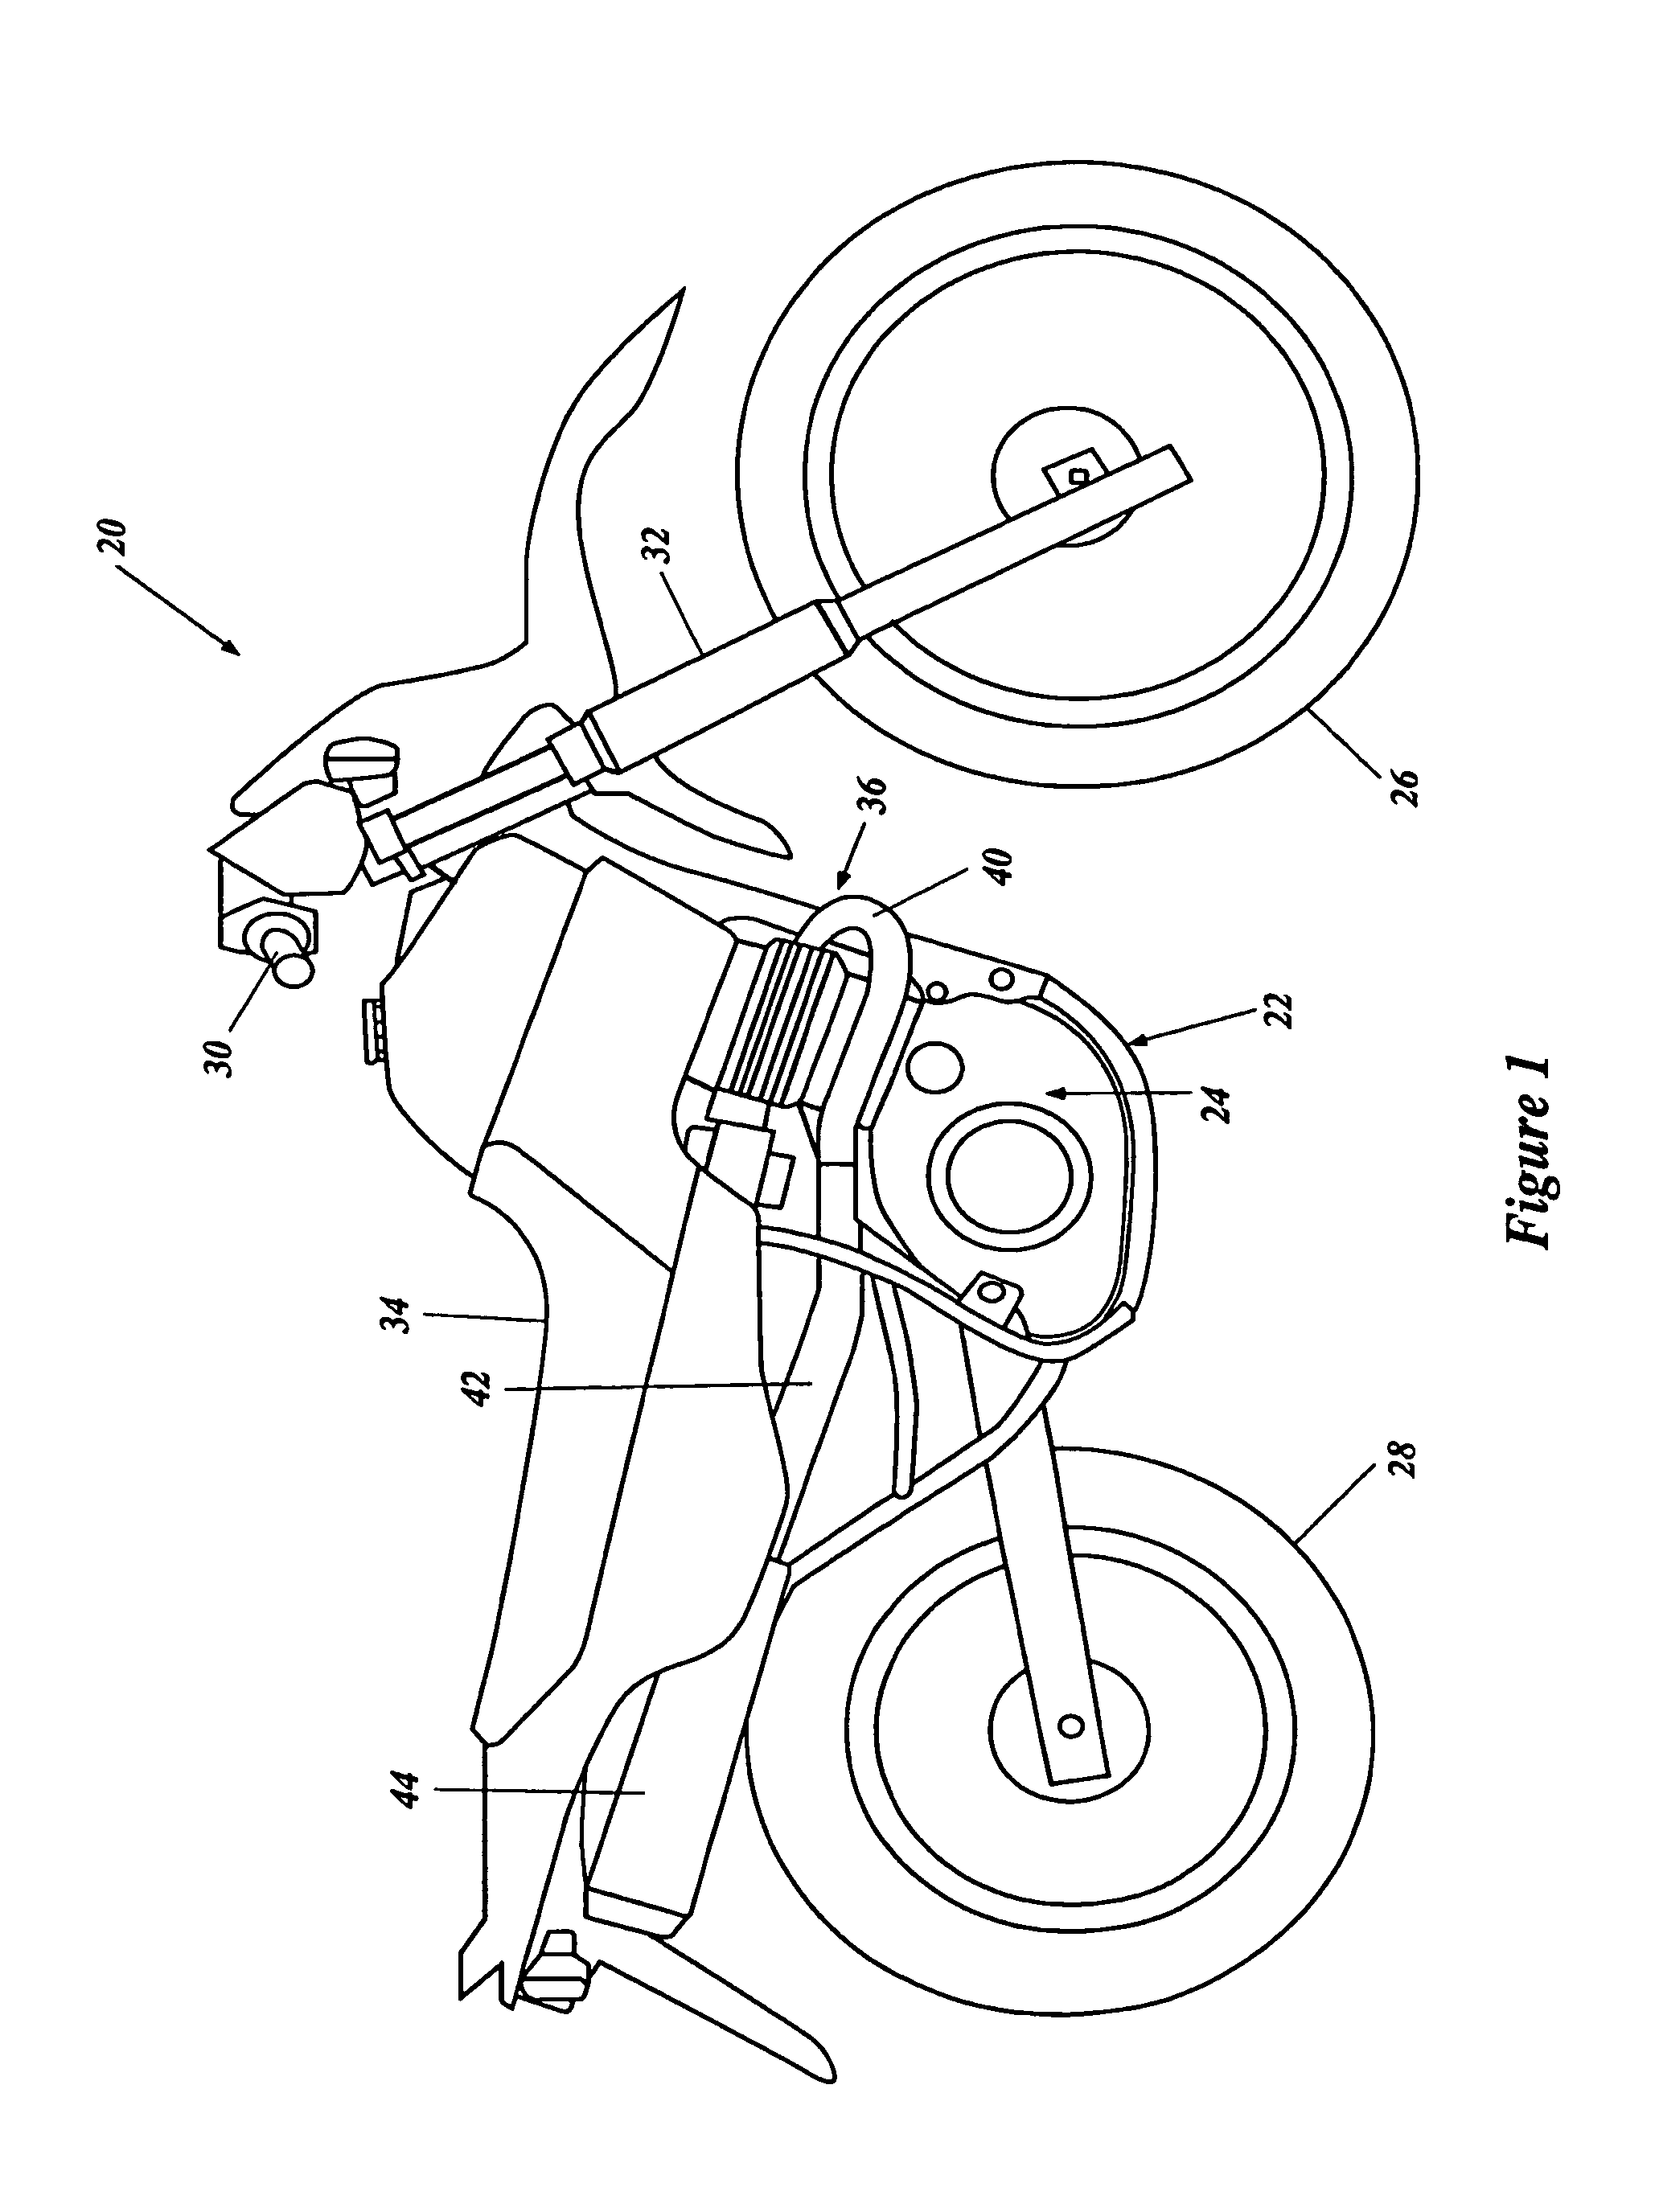 Pipe bending apparatus and method